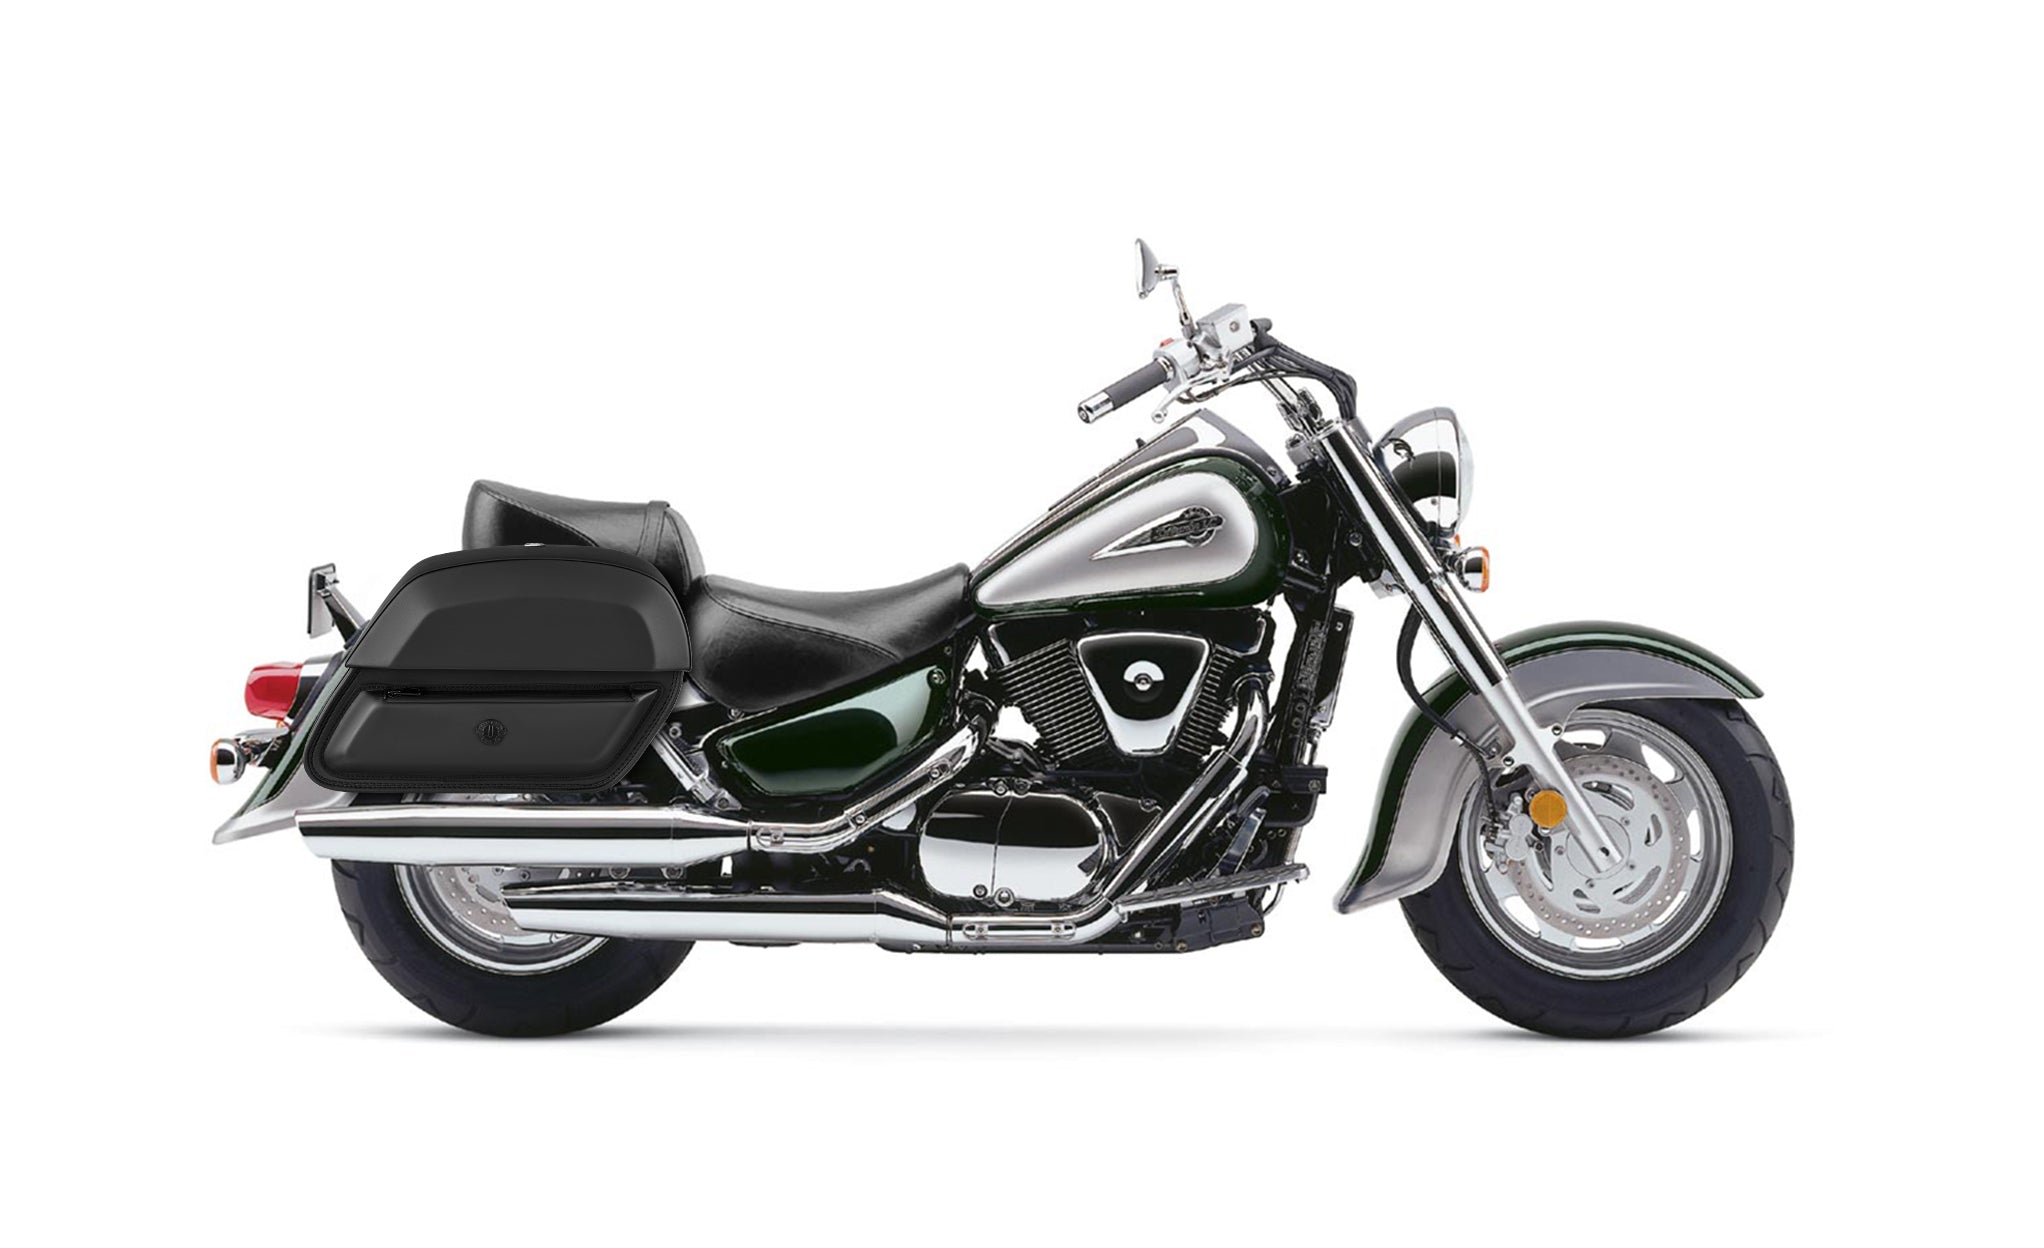 28L - Wraith Medium Suzuki Intruder 1500 VL1500 Leather Motorcycle Saddlebags BAG on Bike View @expand